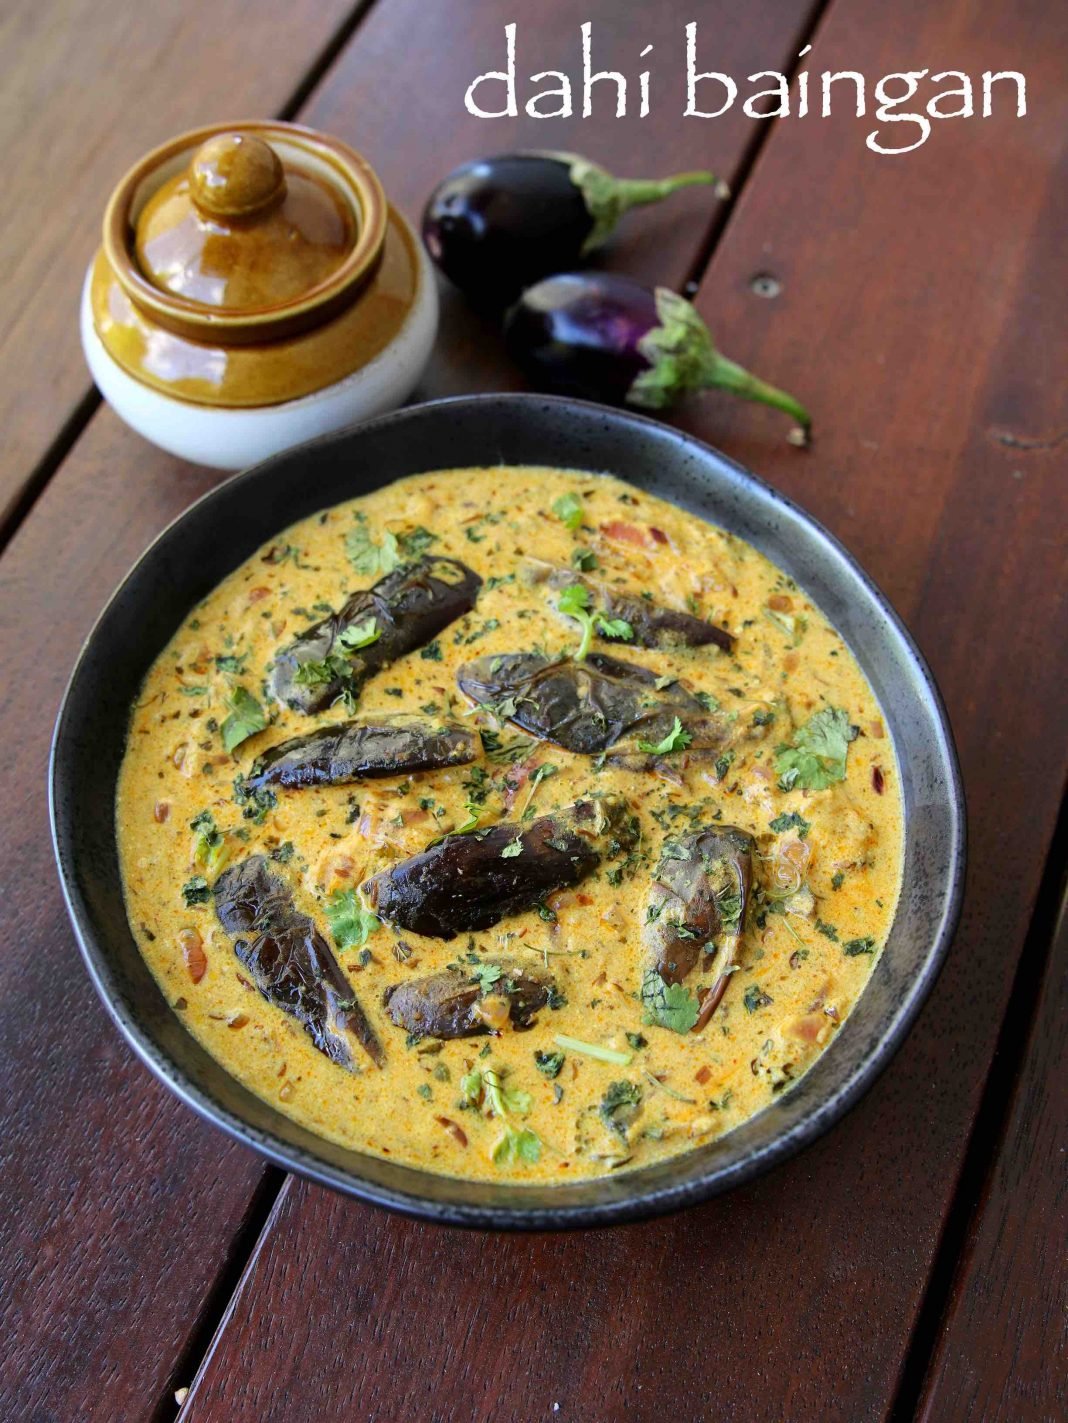 dahi baingan recipe | dahi baigana | brinjal curry in curd